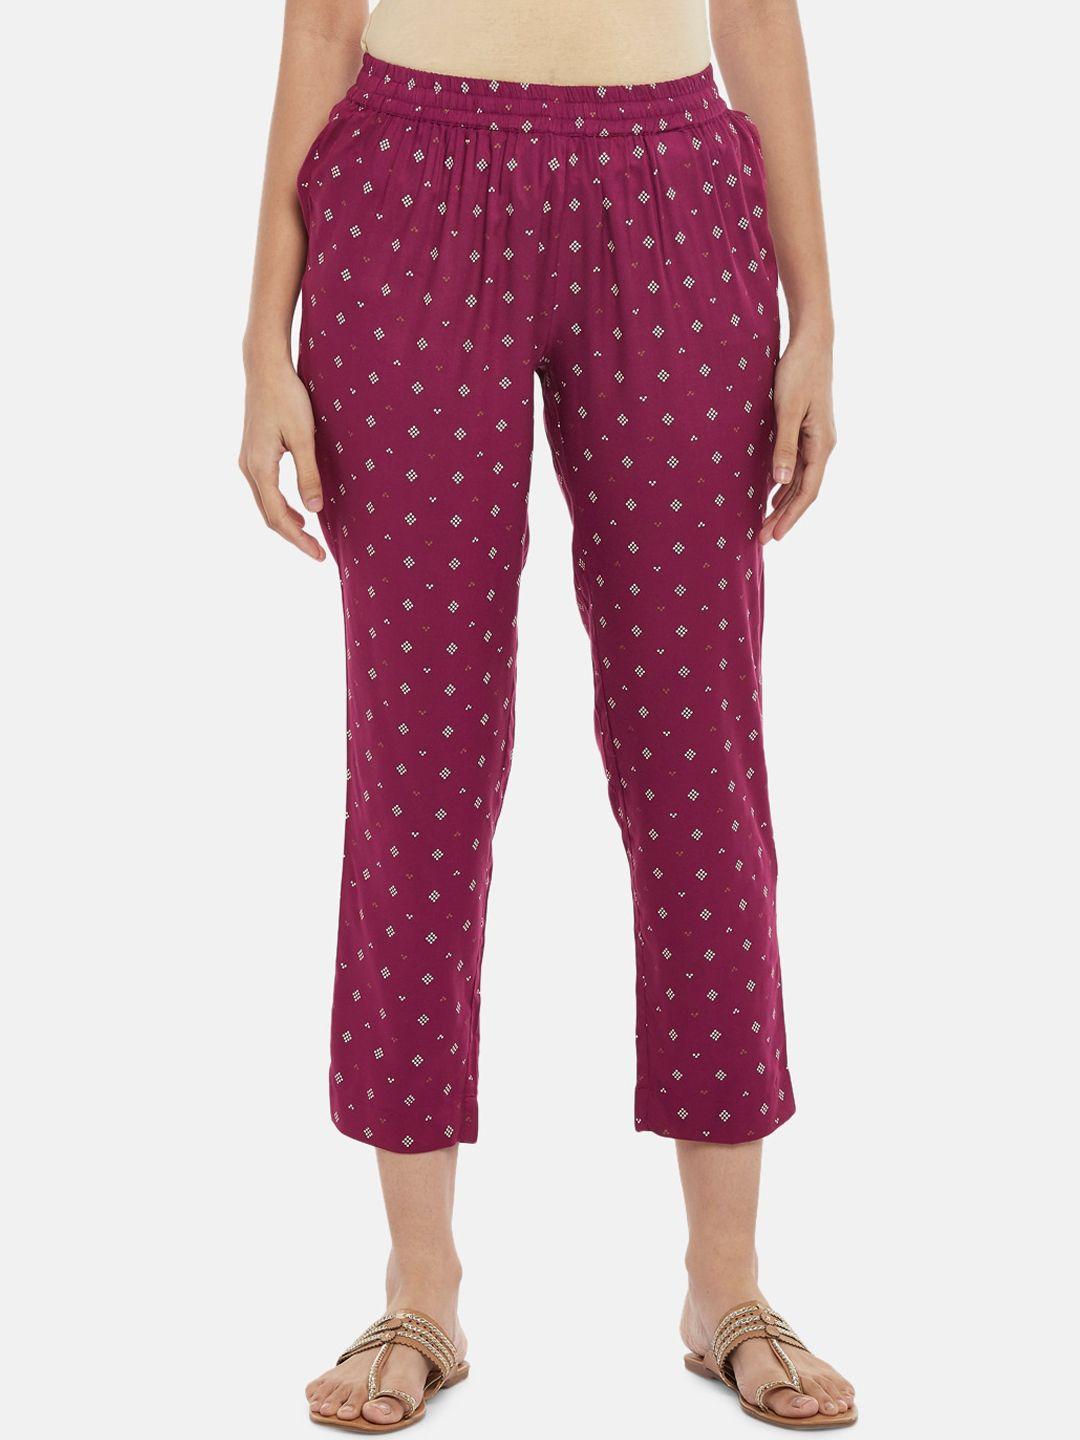 rangmanch-by-pantaloons-women-maroon-printed-cotton-regular-trouser